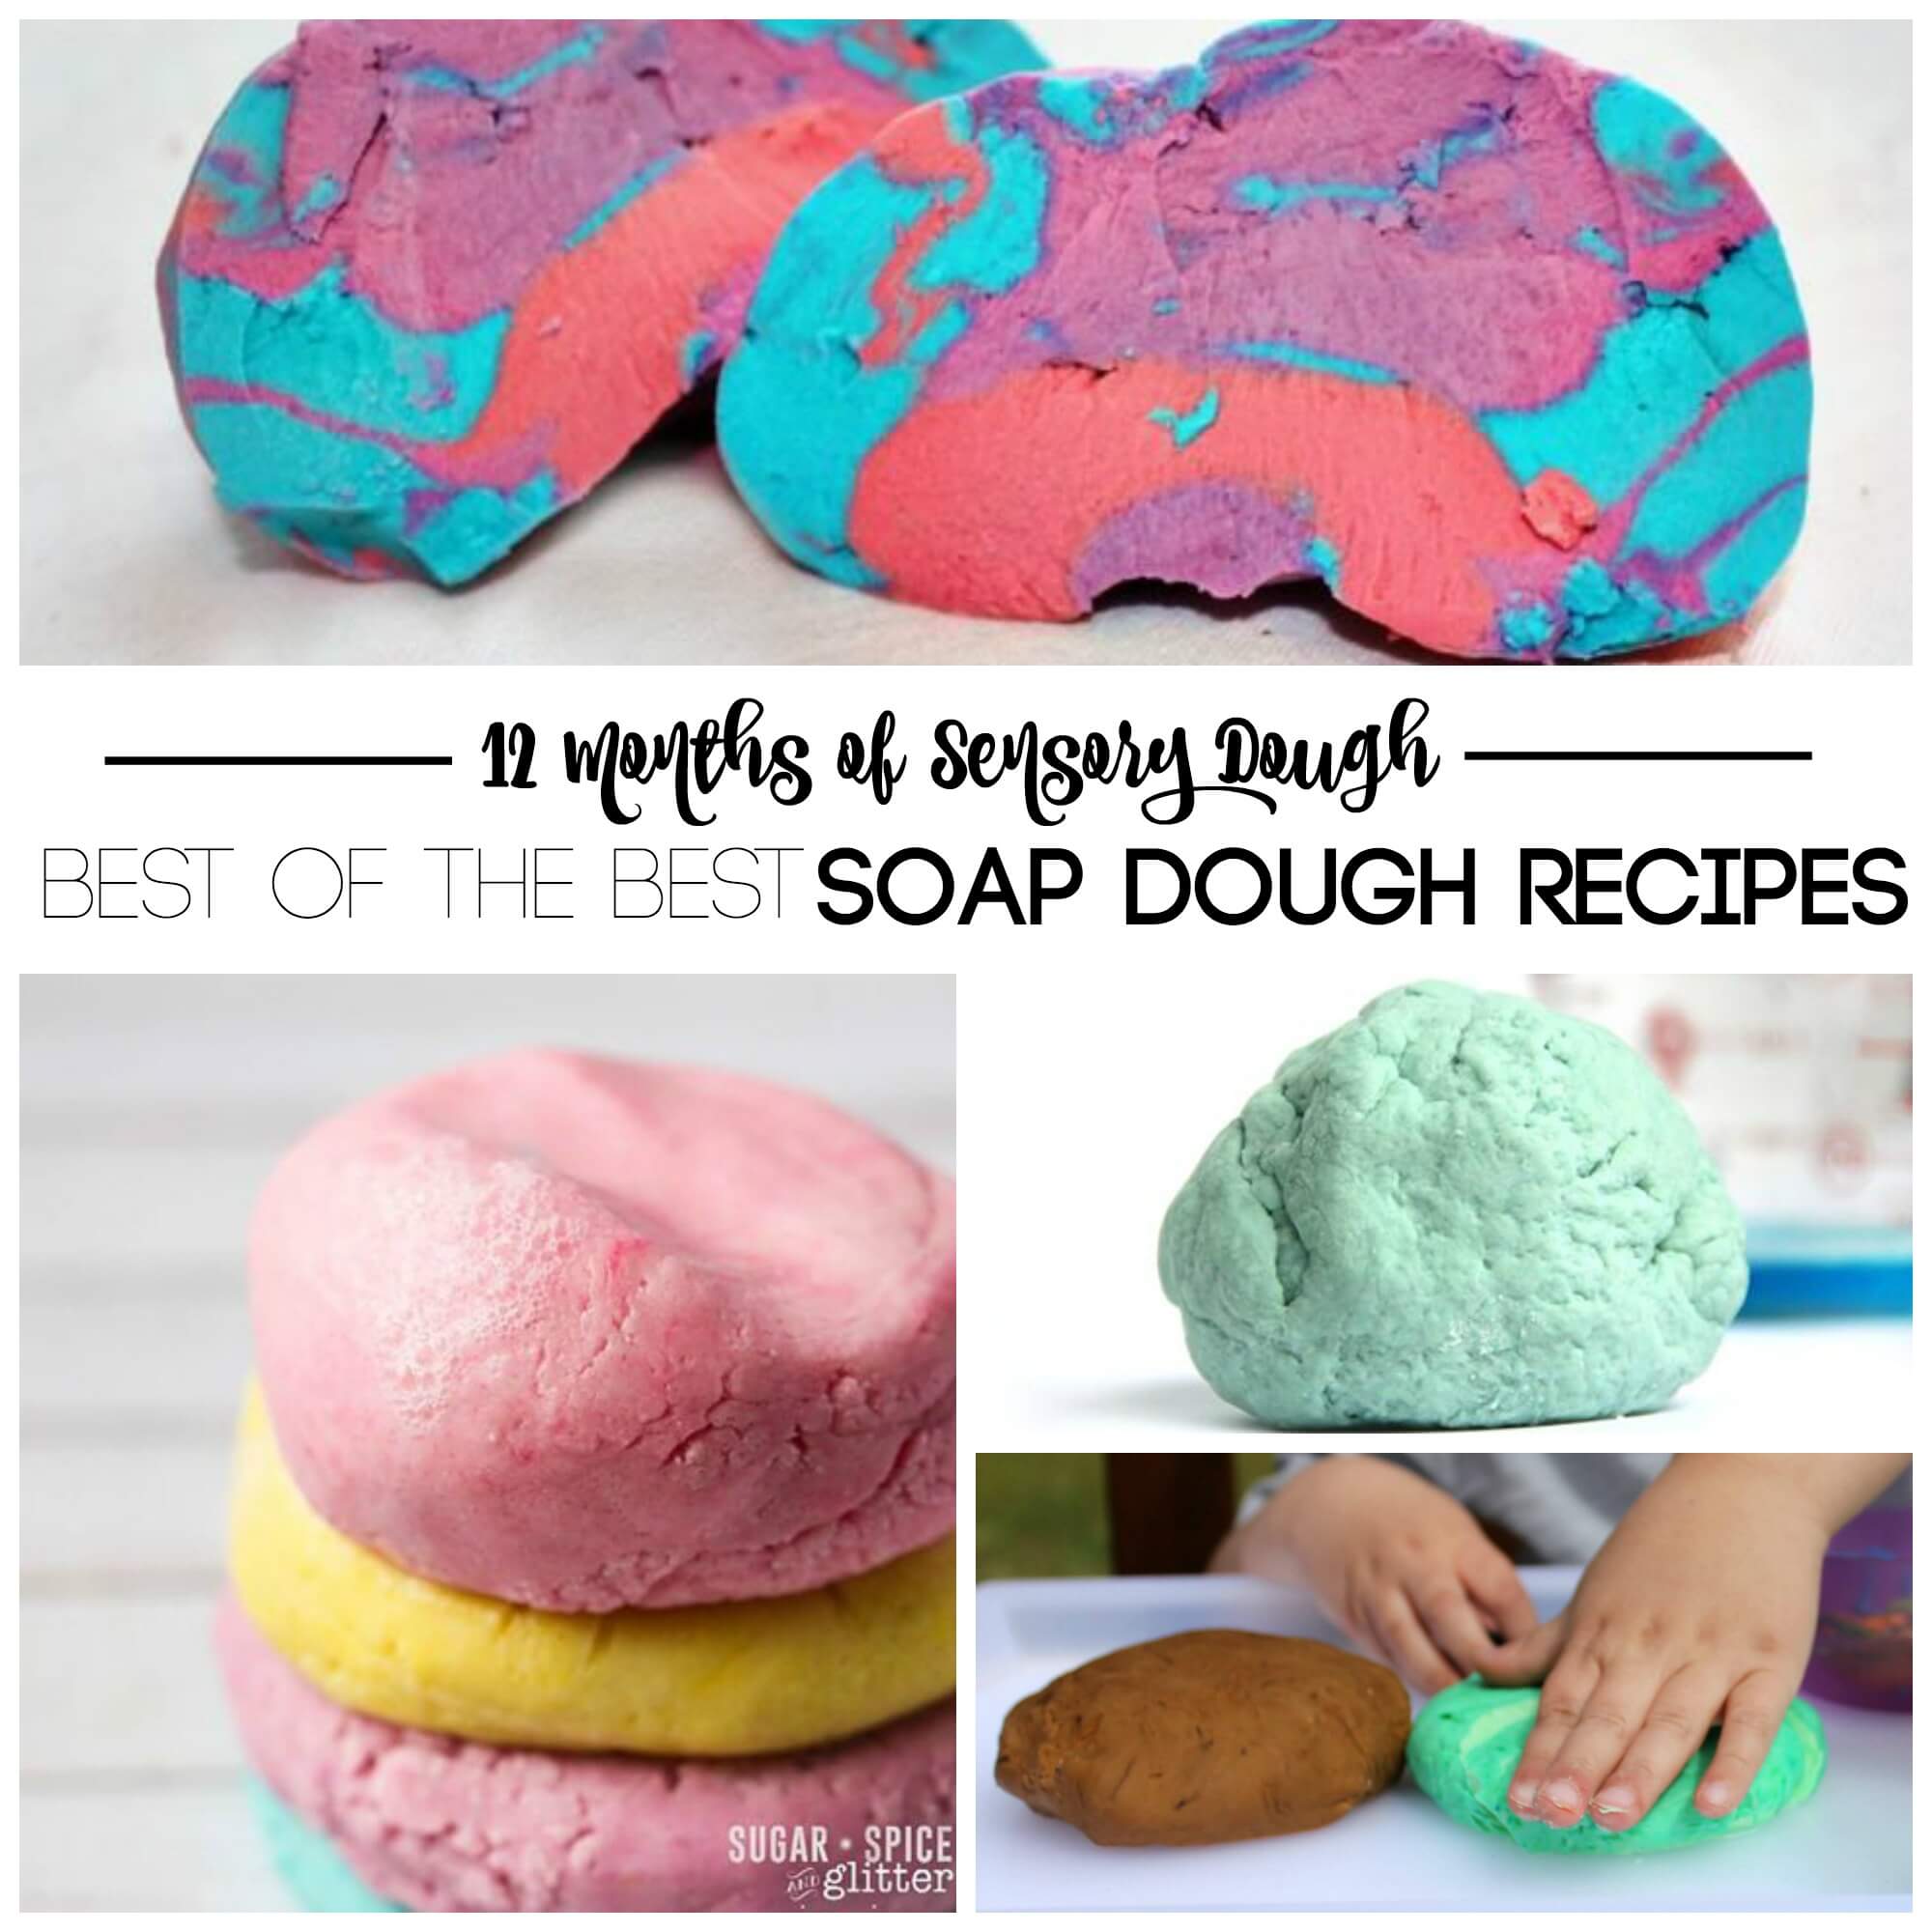 12 months of soap dough recipes